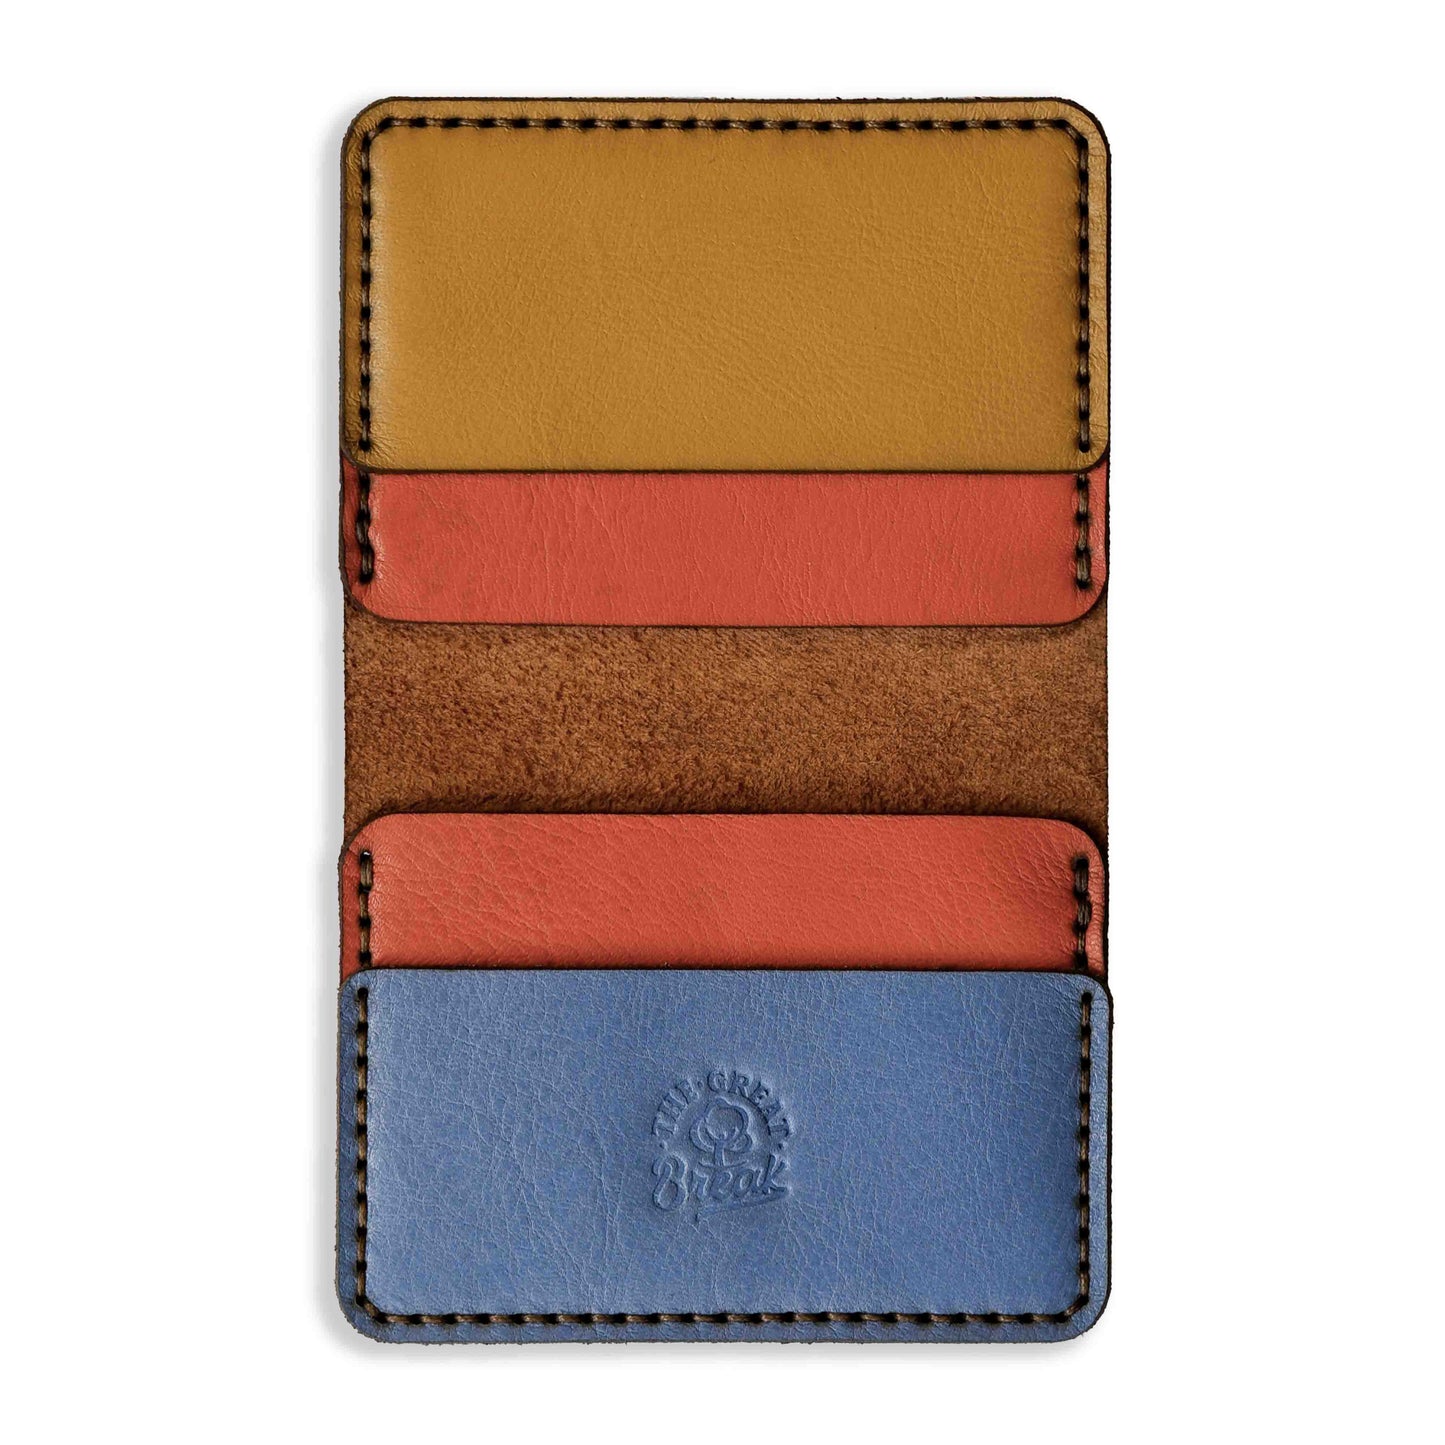 Leather Wallet - Creative Range